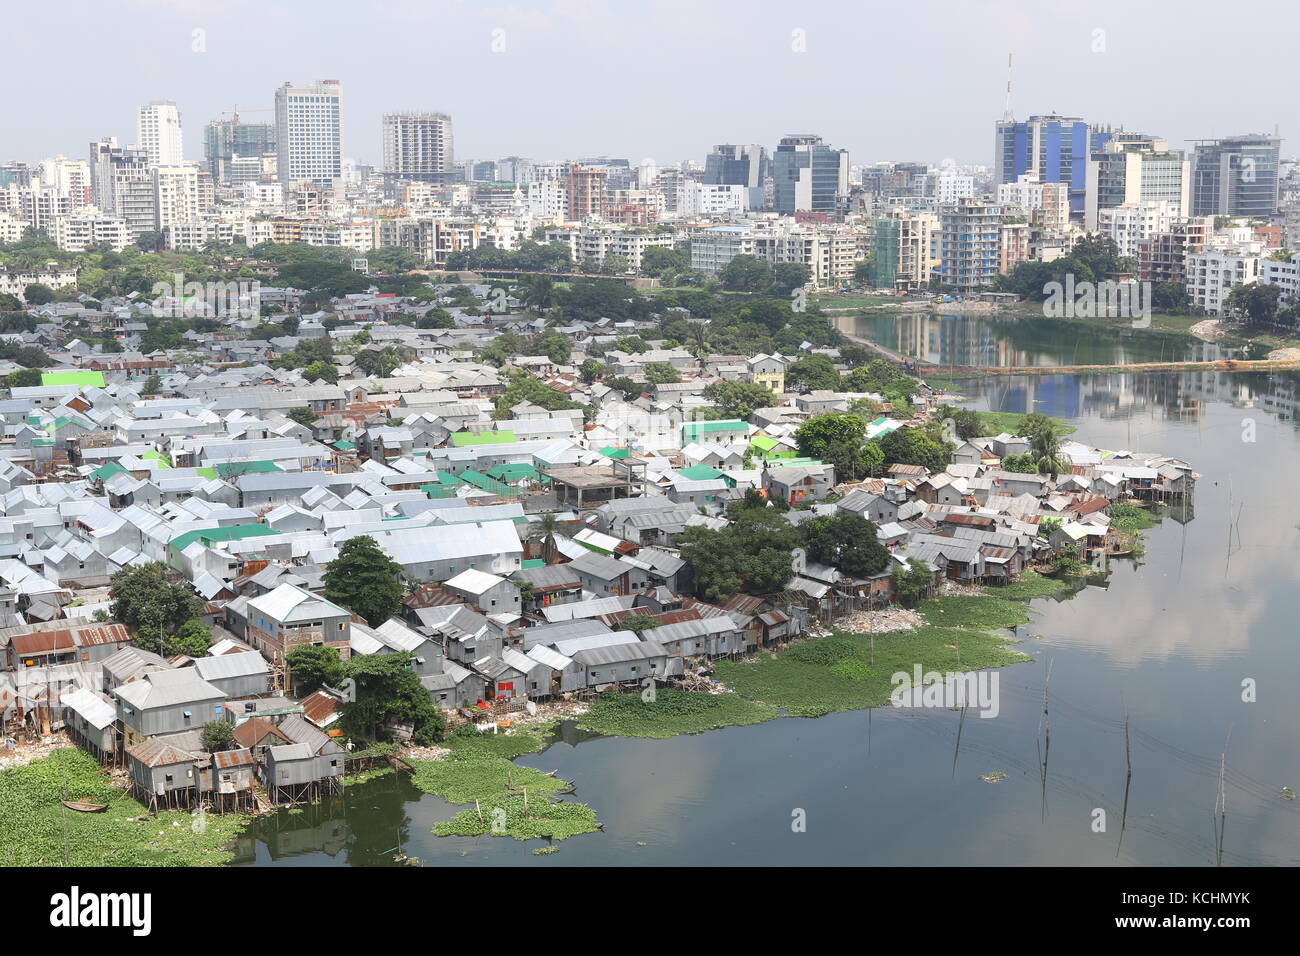 A view of Korail slum, one of Bangladesh's largest slums in Gulshan area, Dhaka, Bangladesh, 04 Oct 2017. Stock Photo